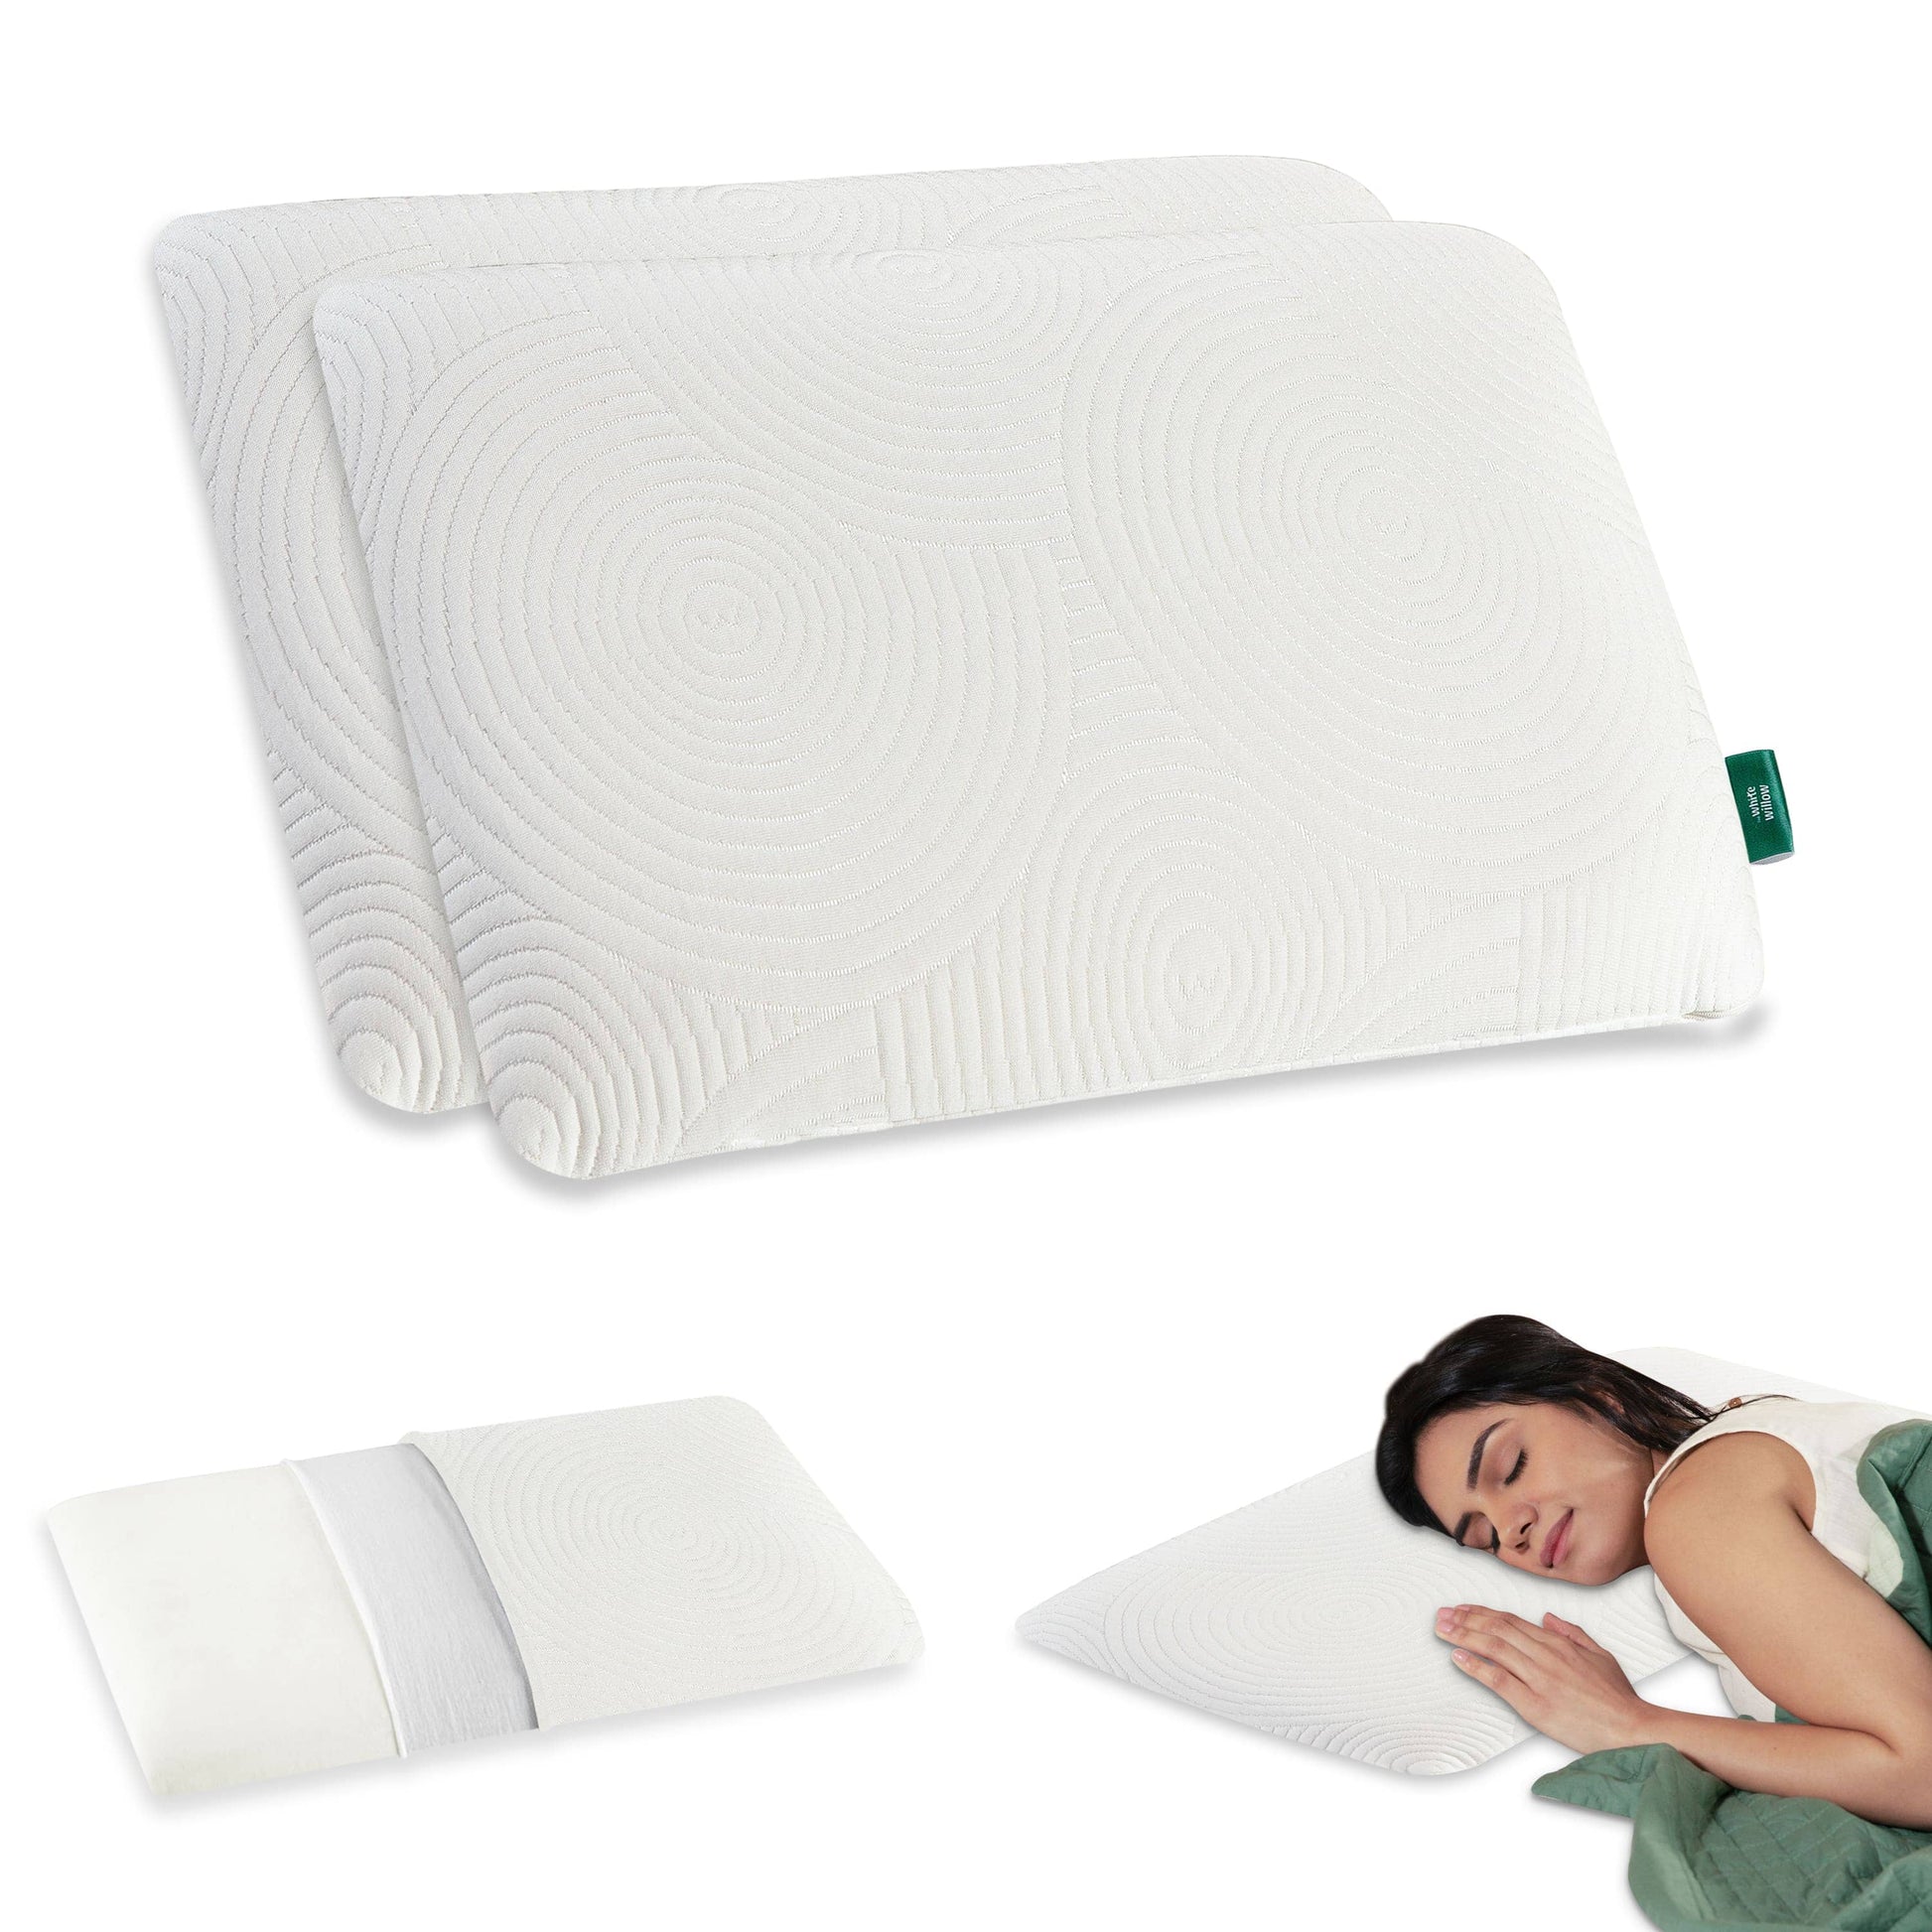 Cypress - Memory Foam Pillow - Regular - Medium Firm Regular Pillow The White Willow Ultra Slim 1.5"H King 24x16 Pack of 2 White